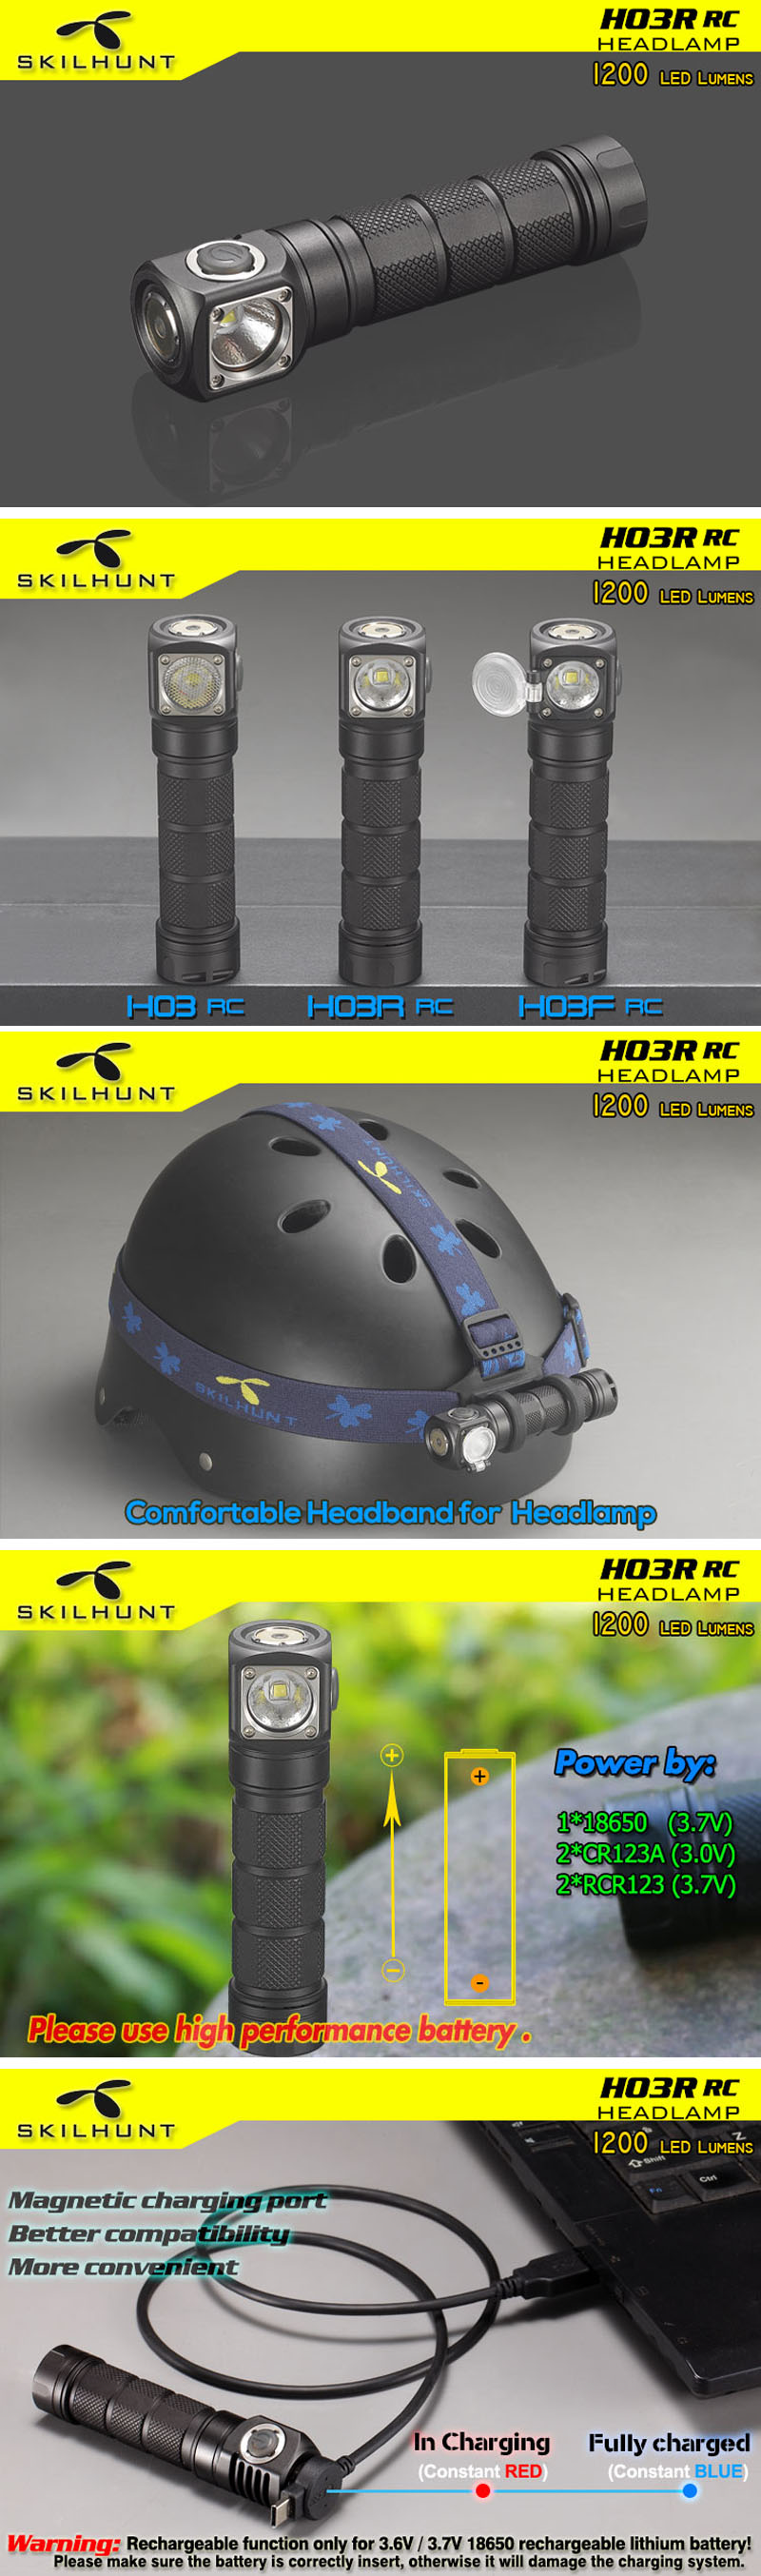 SKILHUNT H03R RC XM-L2 U4 1200LM NW/CW Magnetic Charging LED Flashlight Outdoor Headlamp Headlight